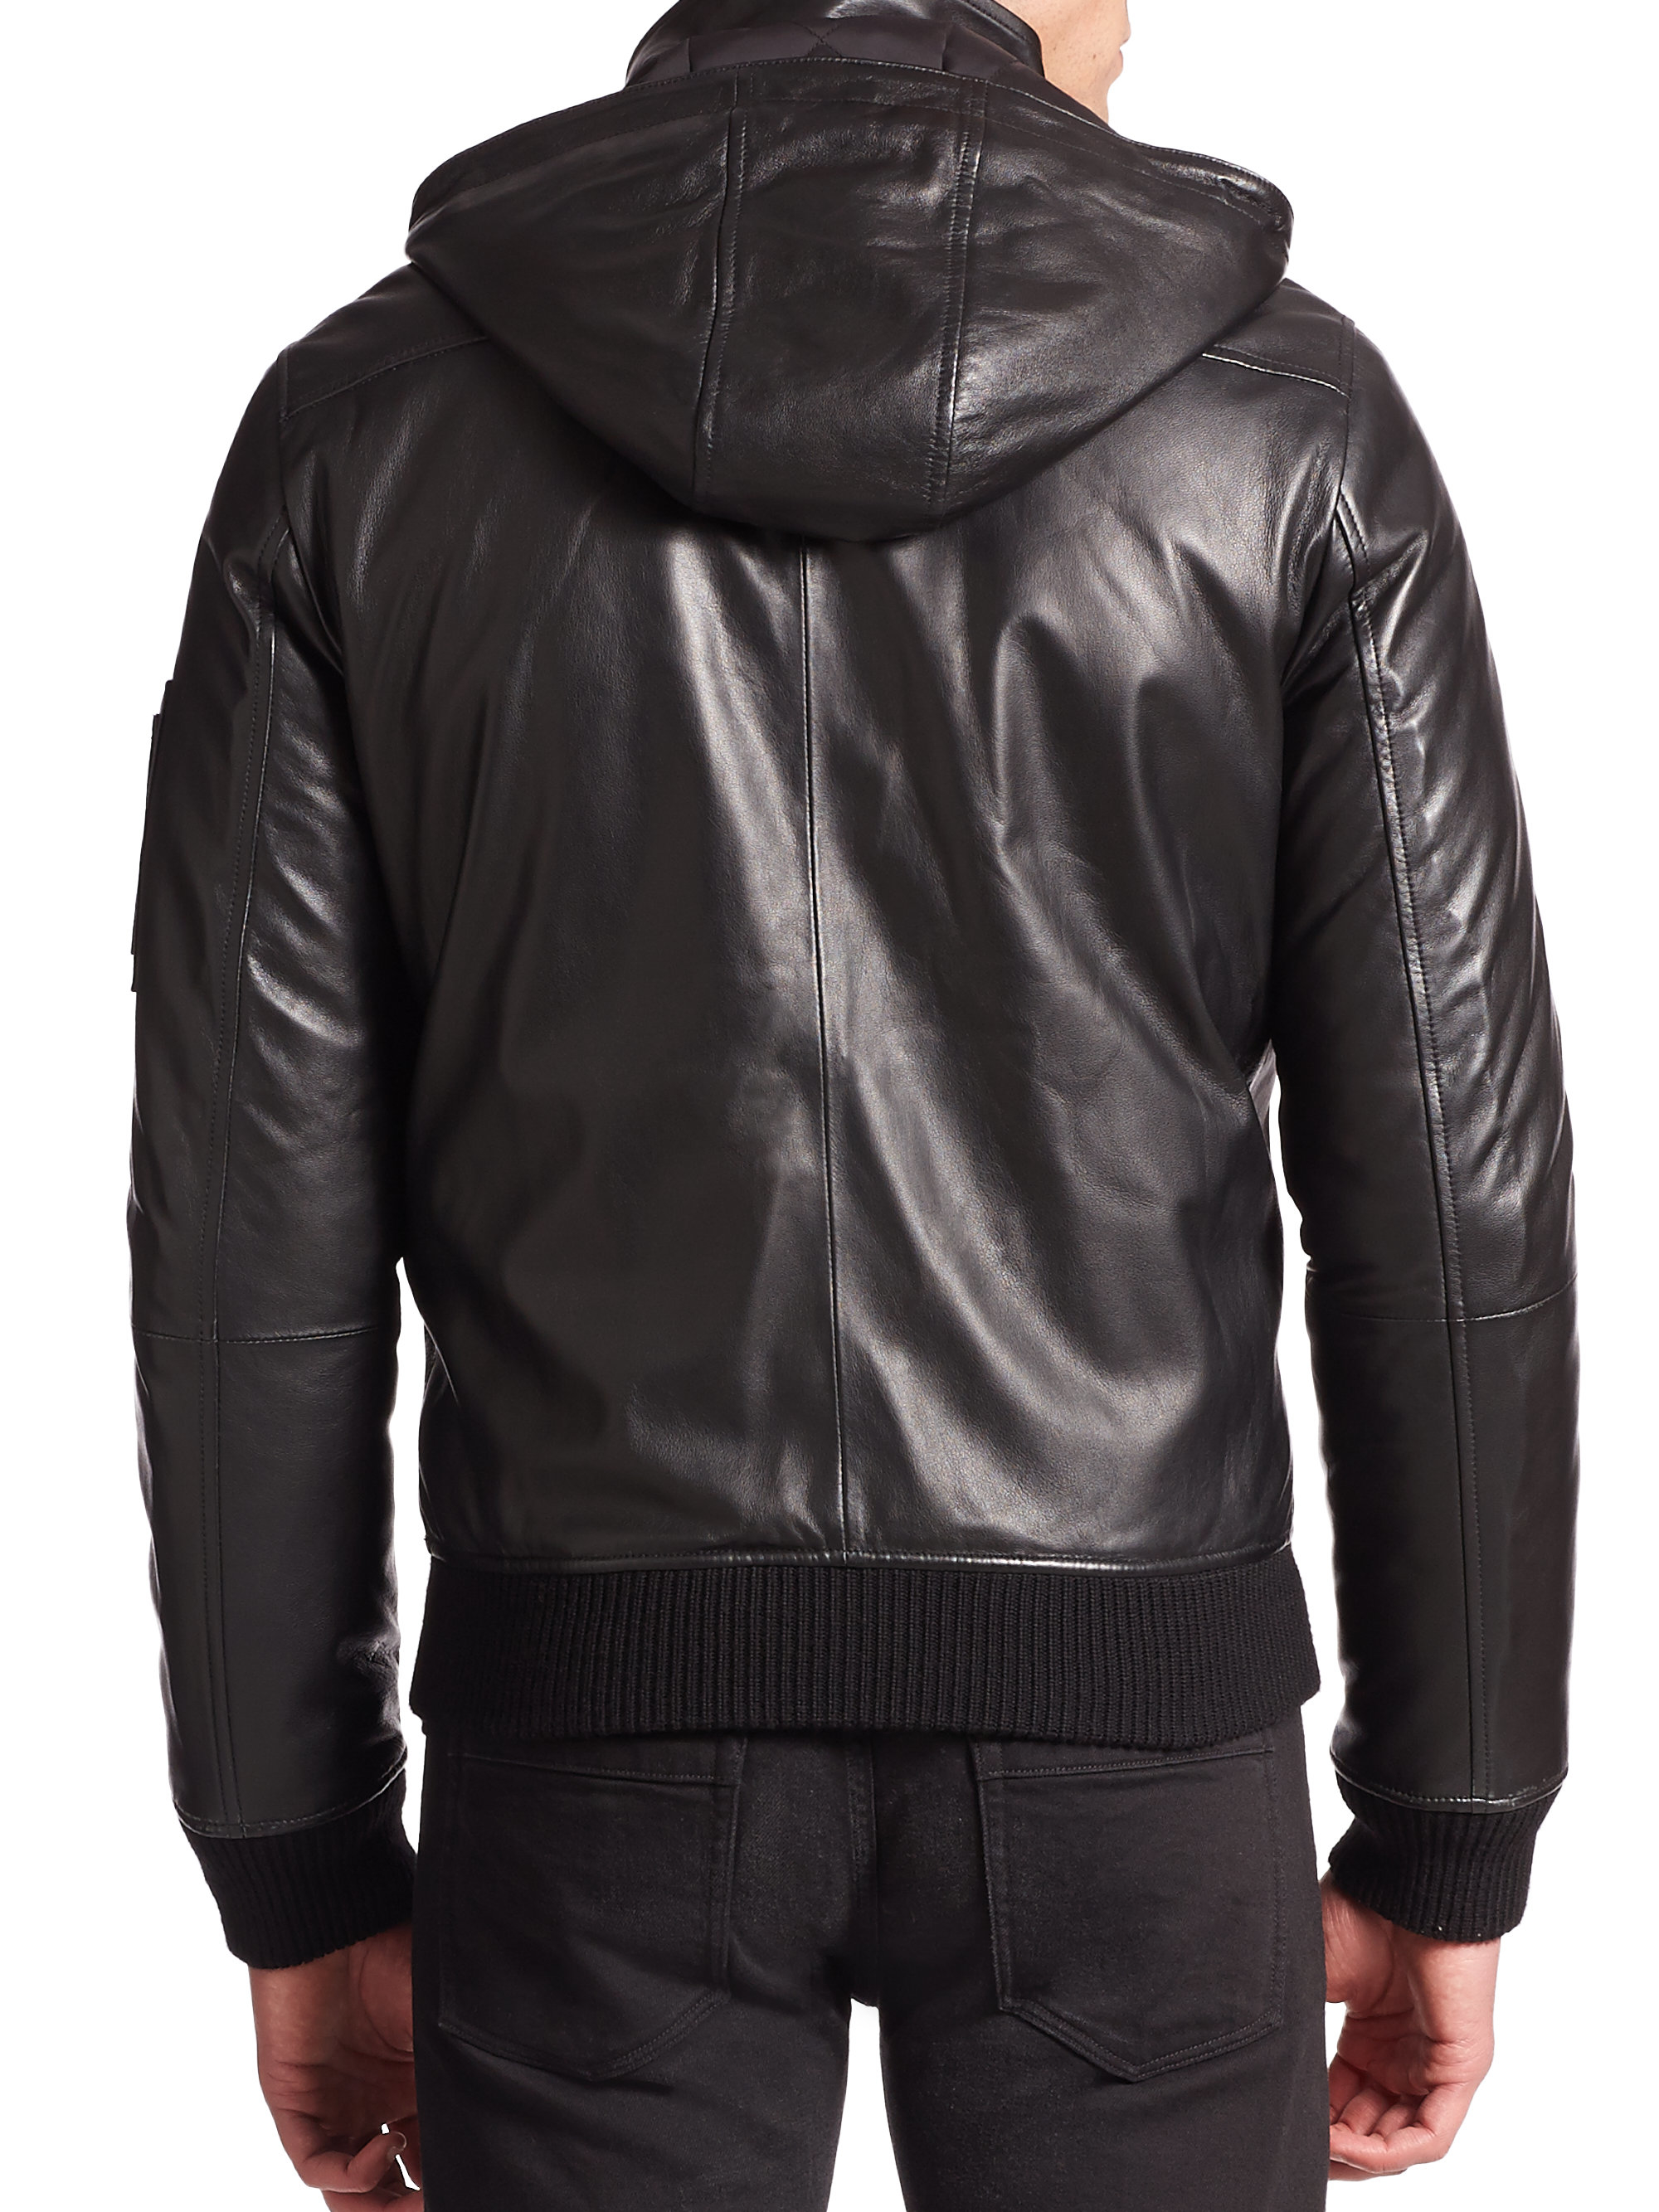 Michael Kors Hooded Leather Jacket in Black for Men - Lyst